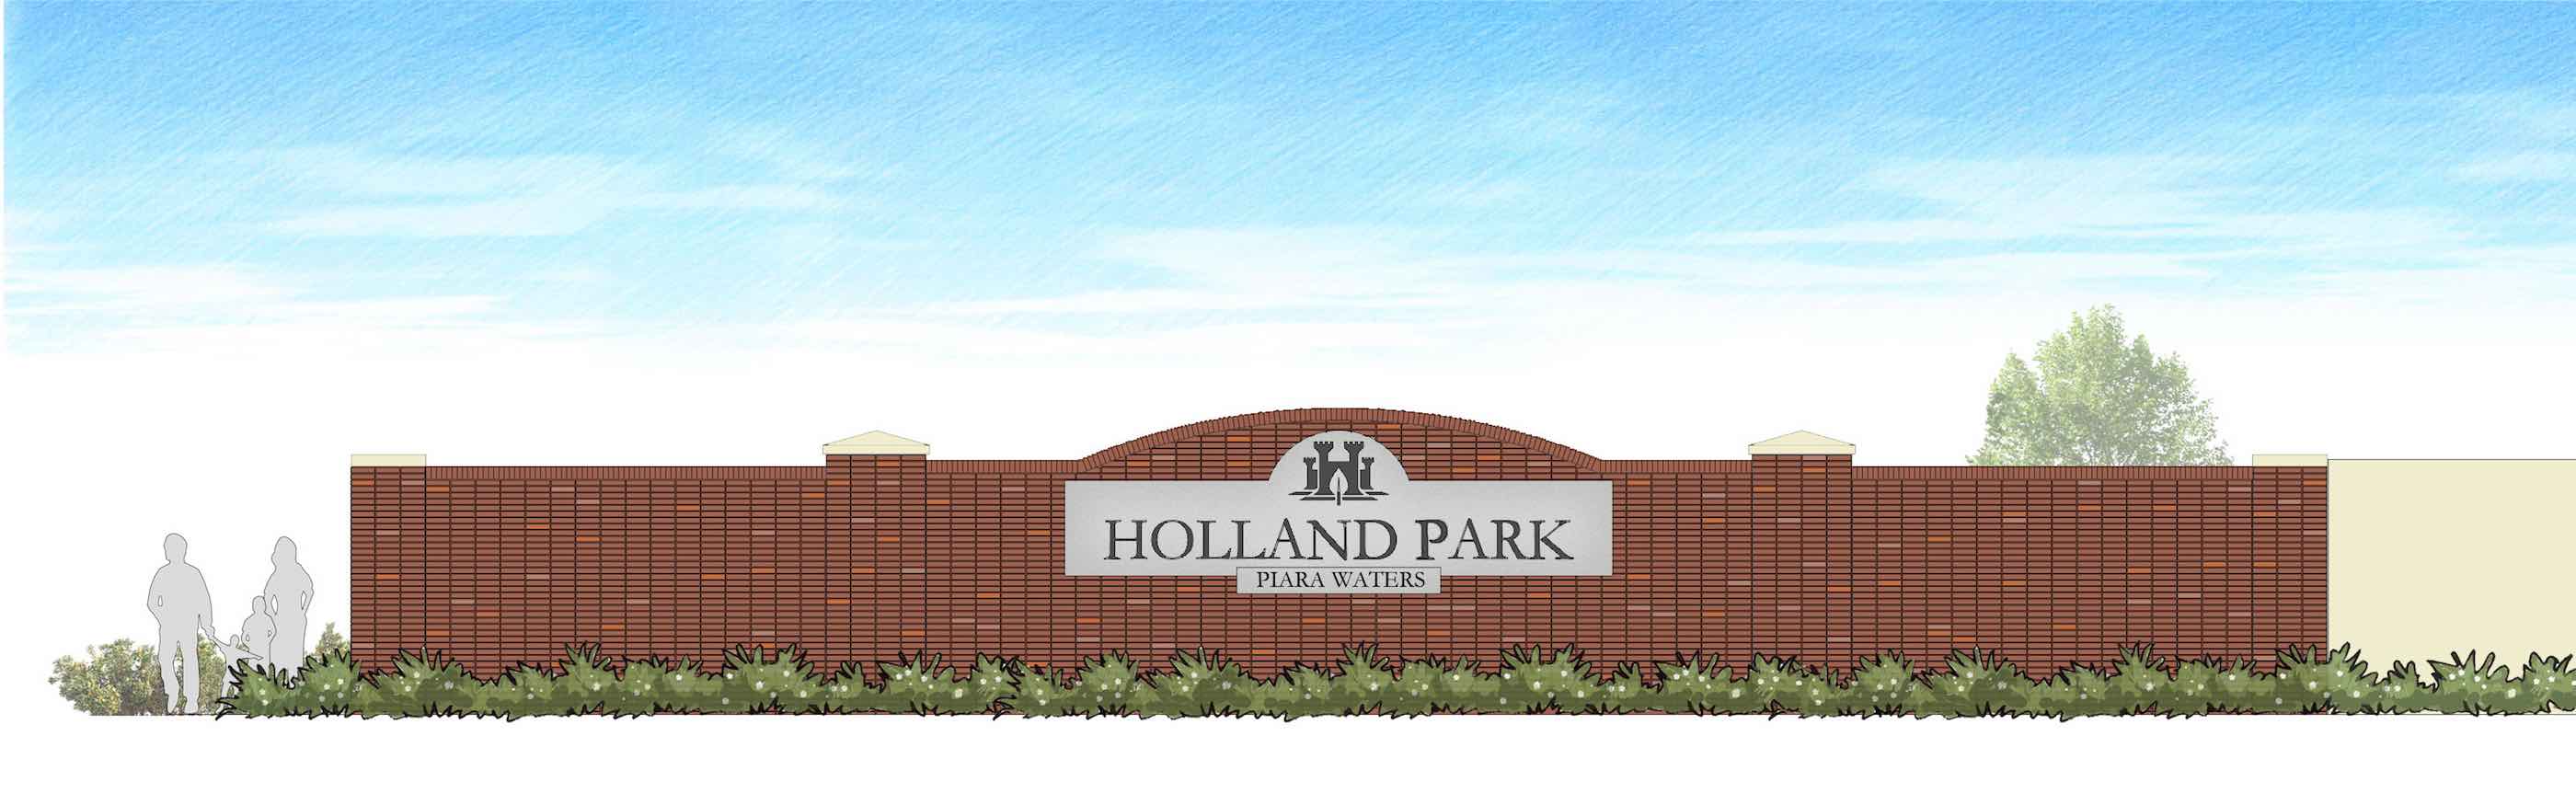 holland-park-estate-entry-statement-artist-impression